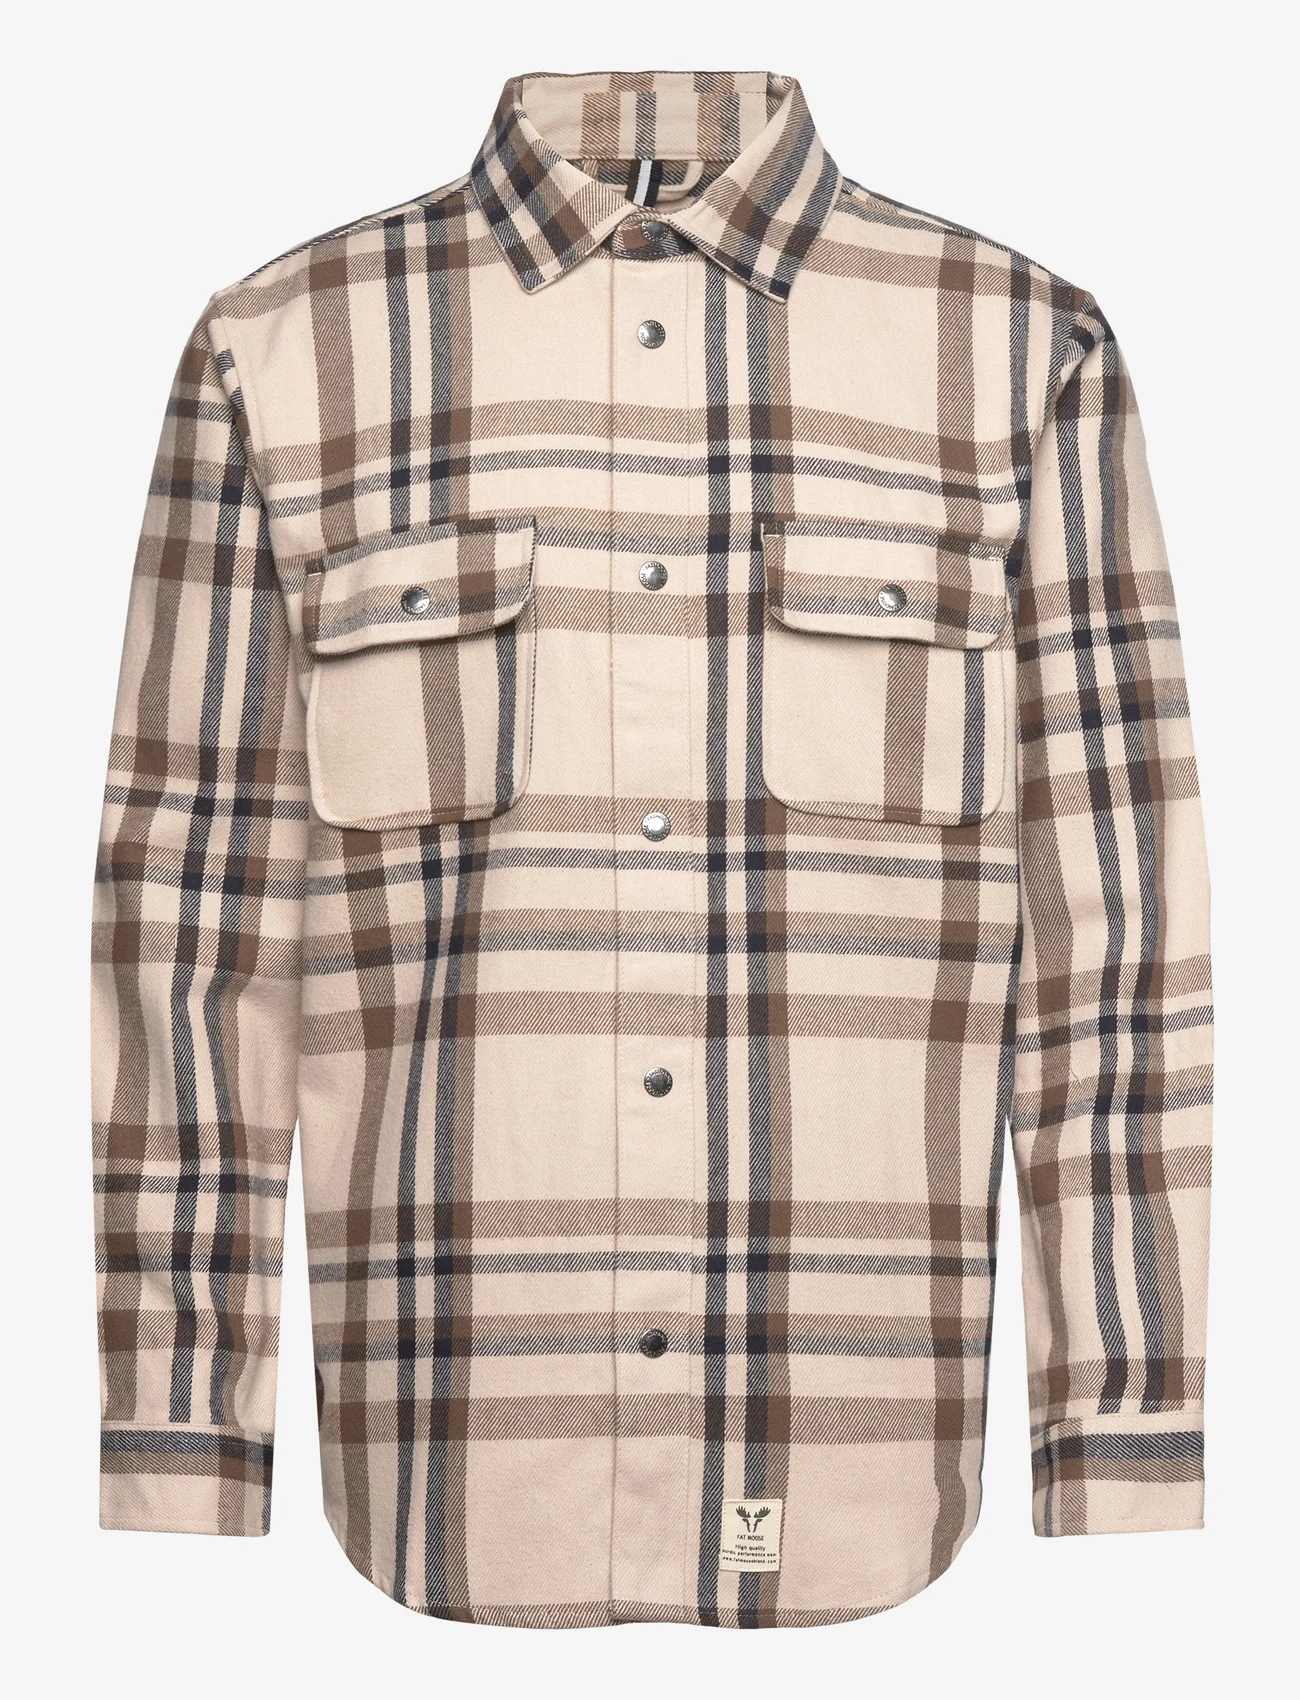 Fat Moose - Adrian Cotton Check Shirt - karierte hemden - ecru/brown check - 0